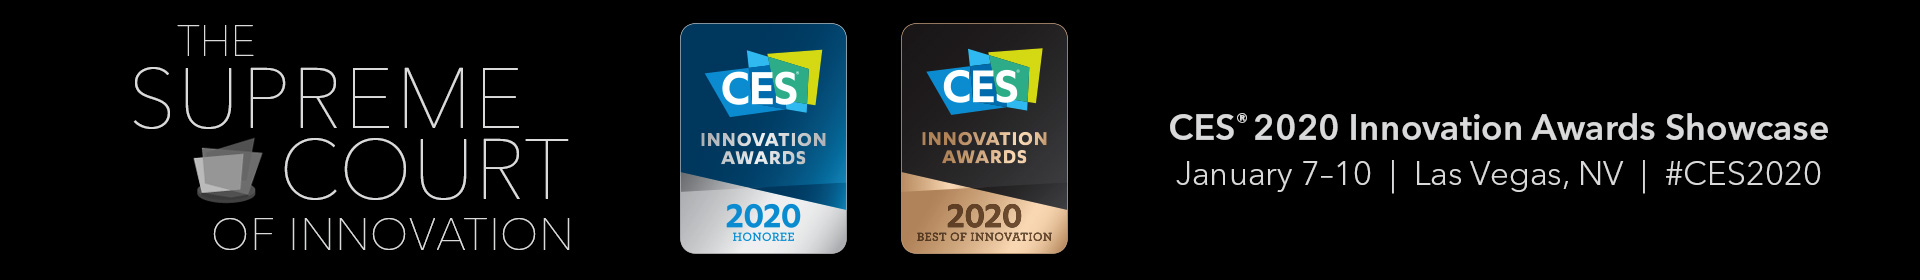 CES 2020 Innovation Awards Event Banner